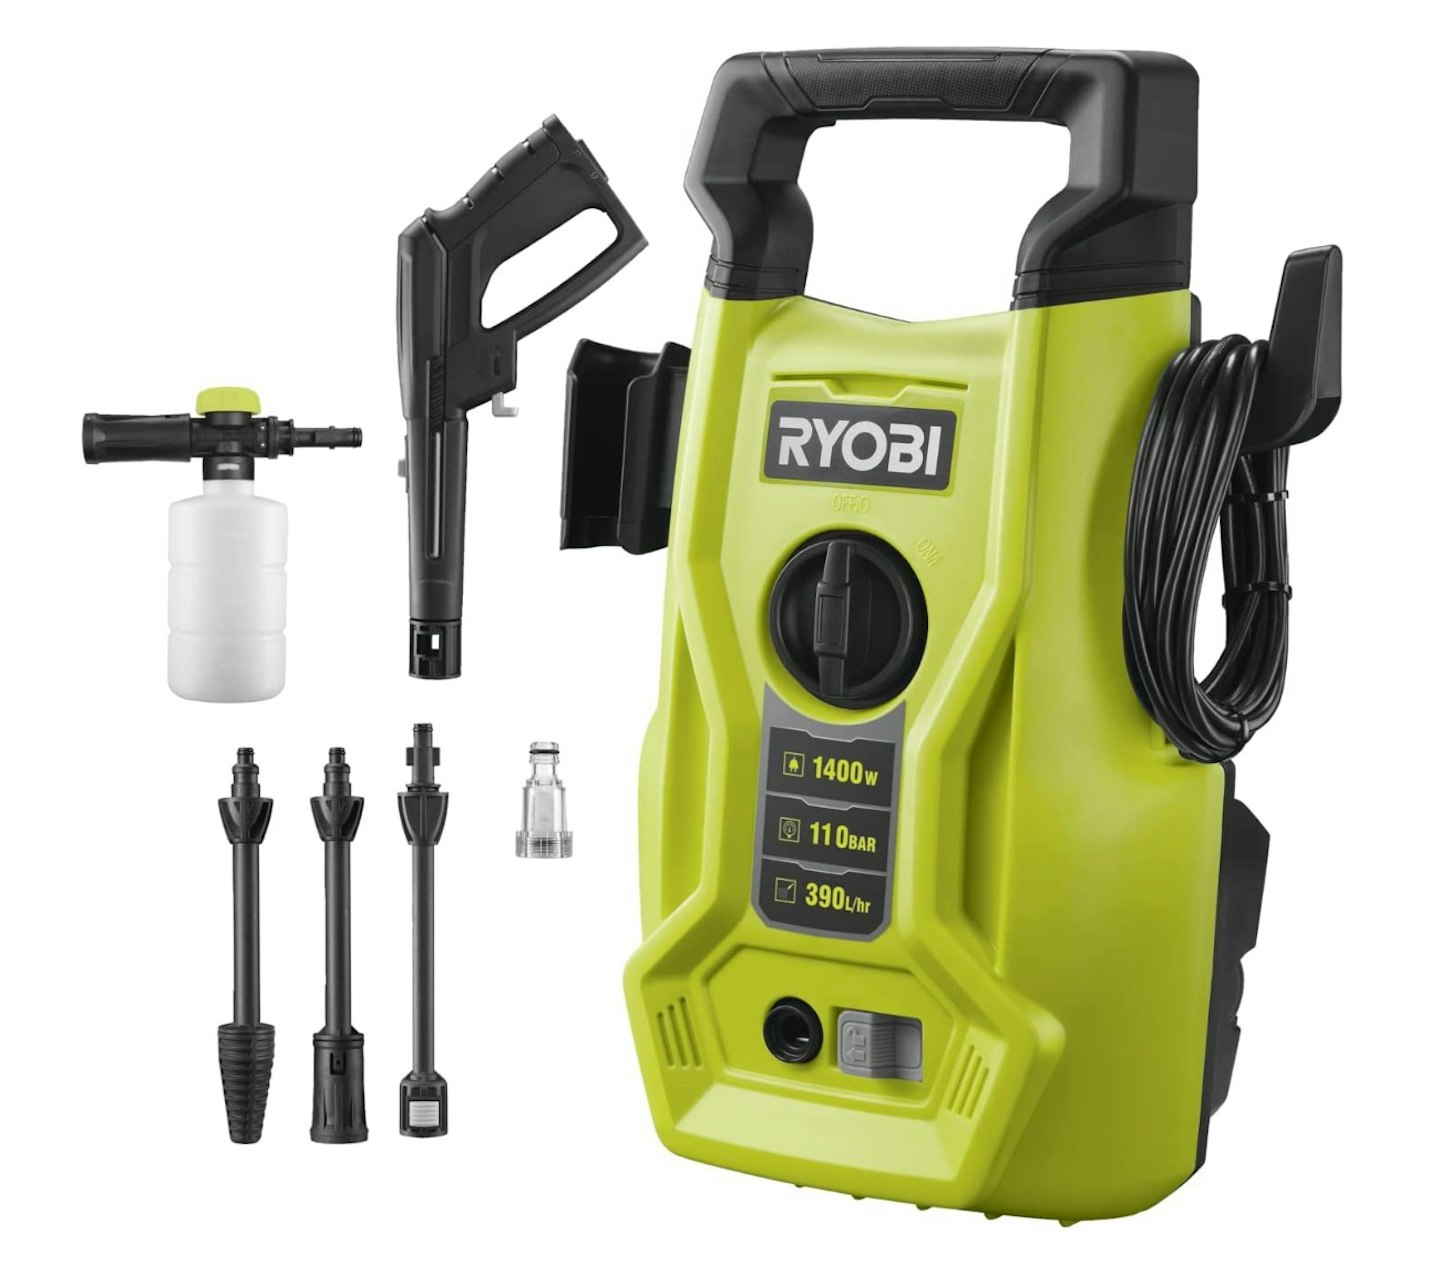 RYOBI RY110PWA 1400W 110bar Pressure Washer, Hyper Green,5133005366